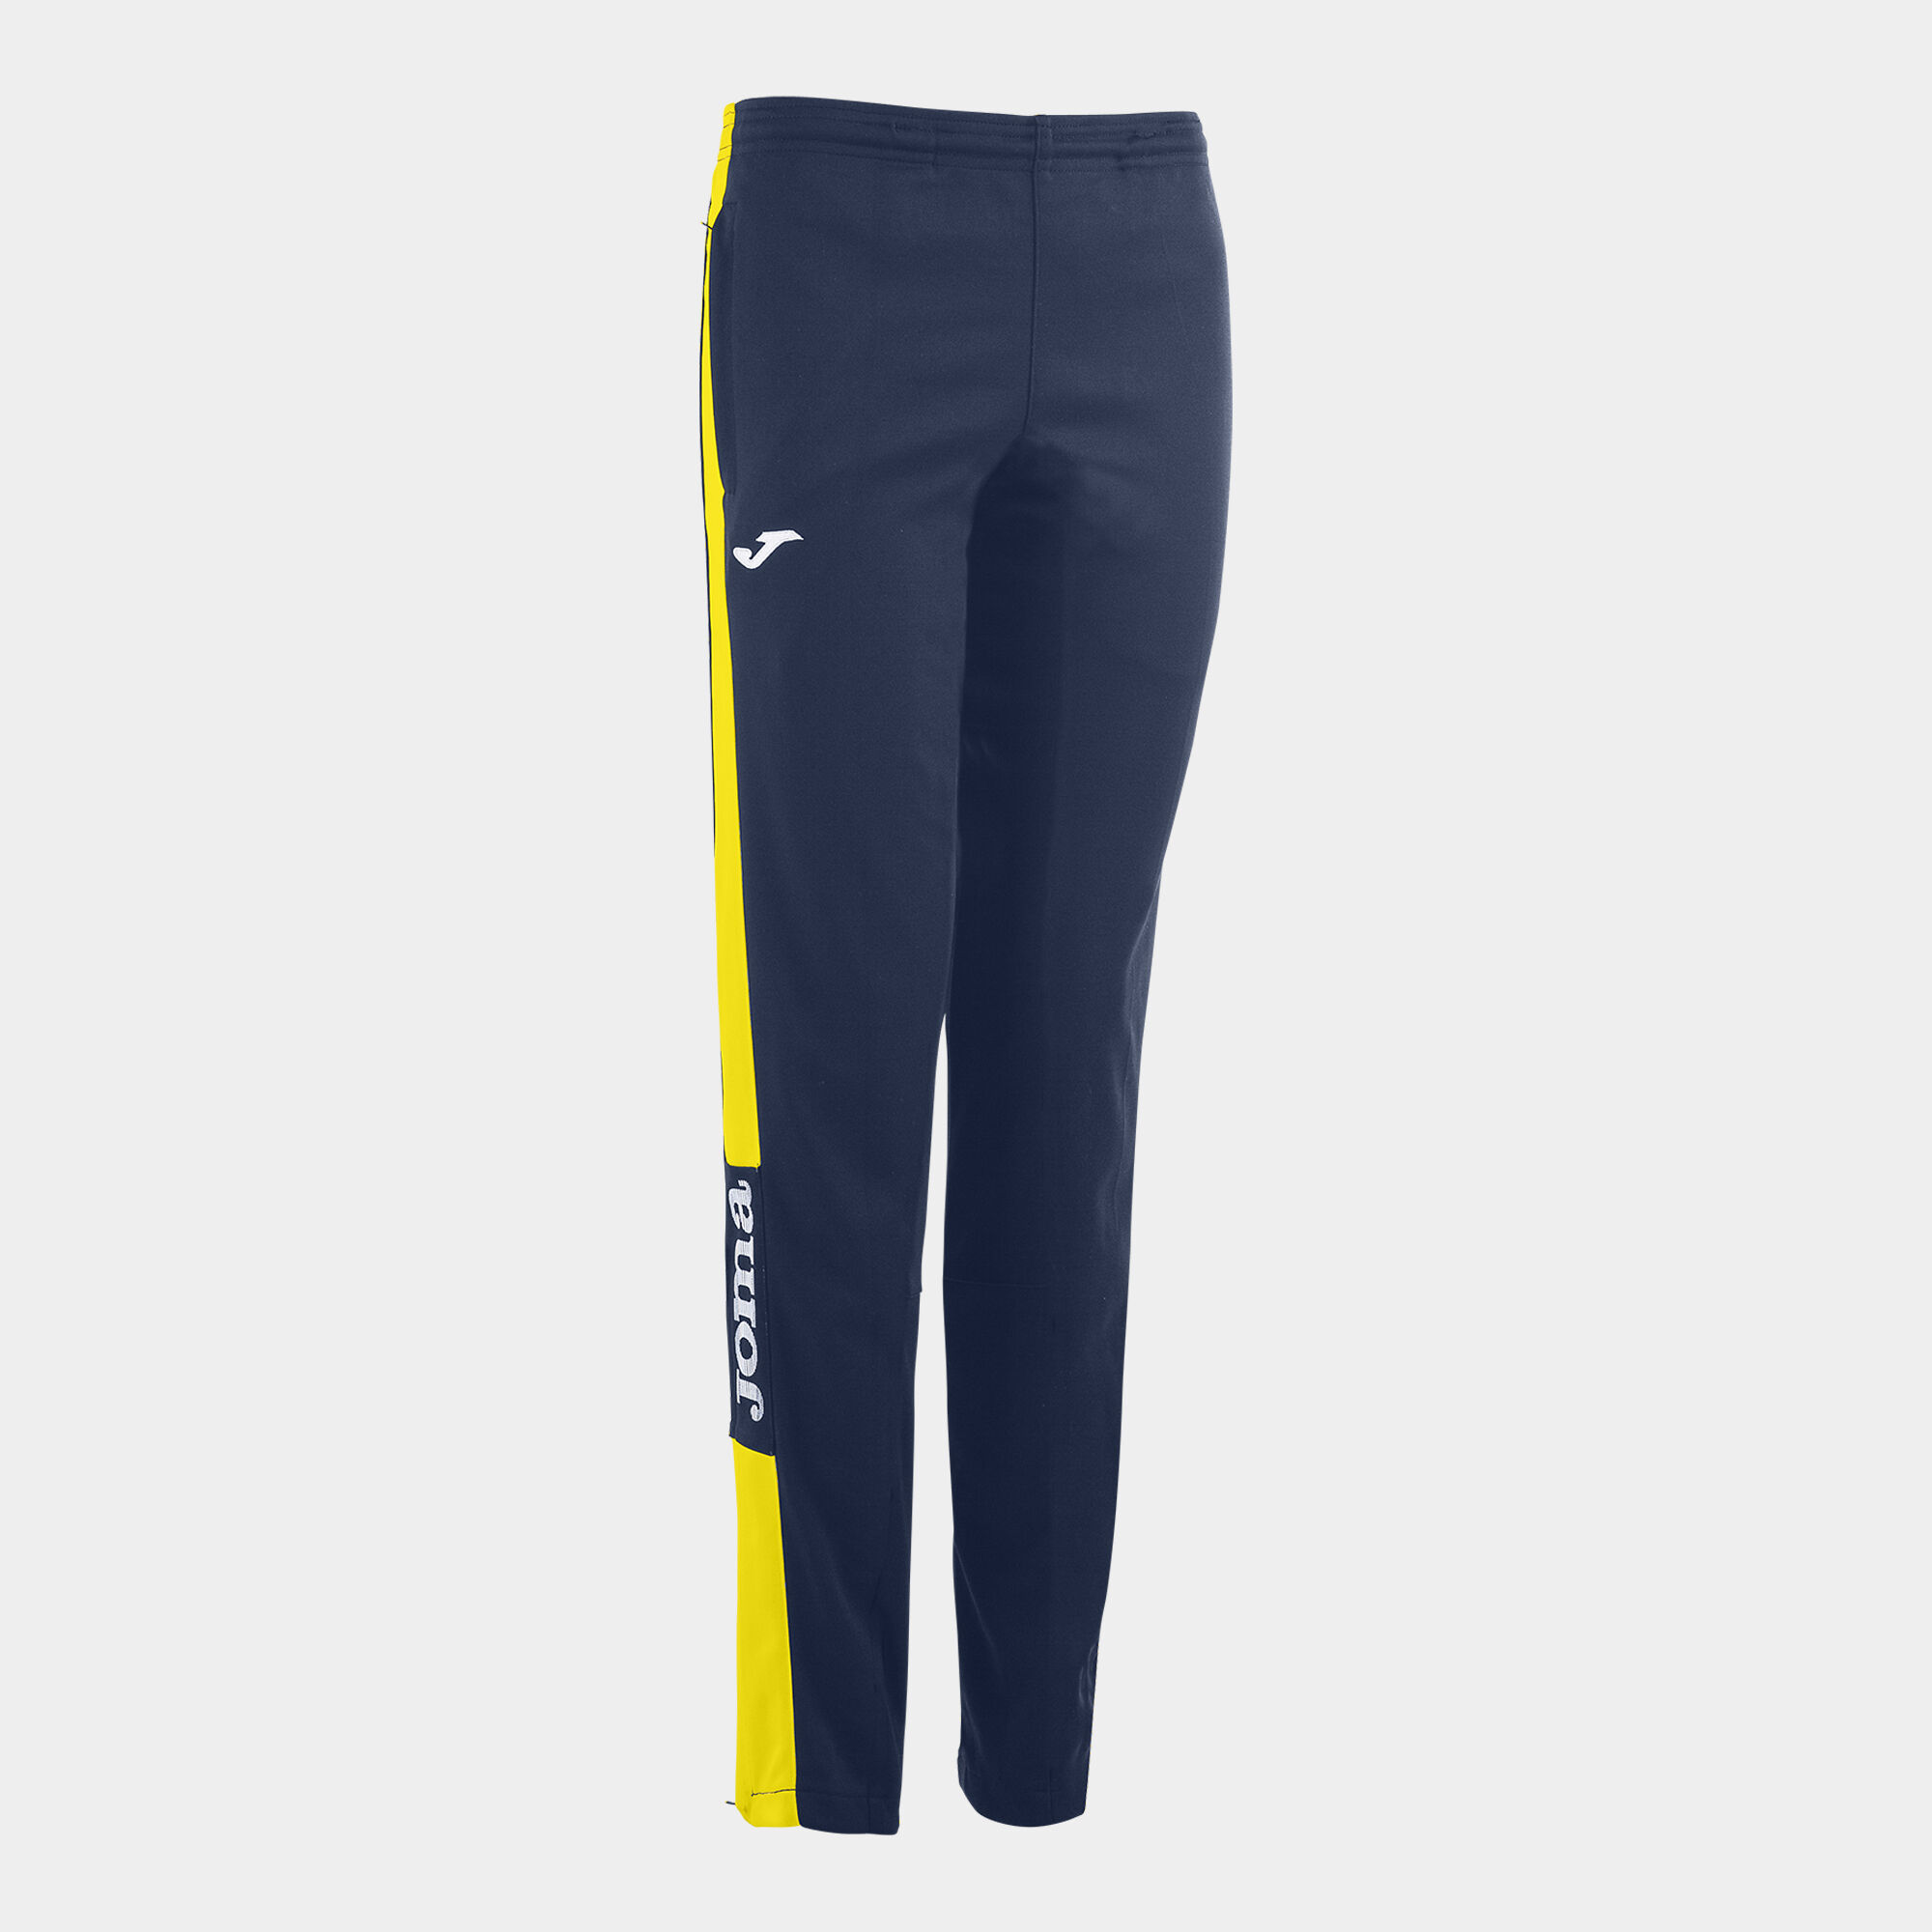 Pantaloni lungi damă Championship IV bleumarin galben